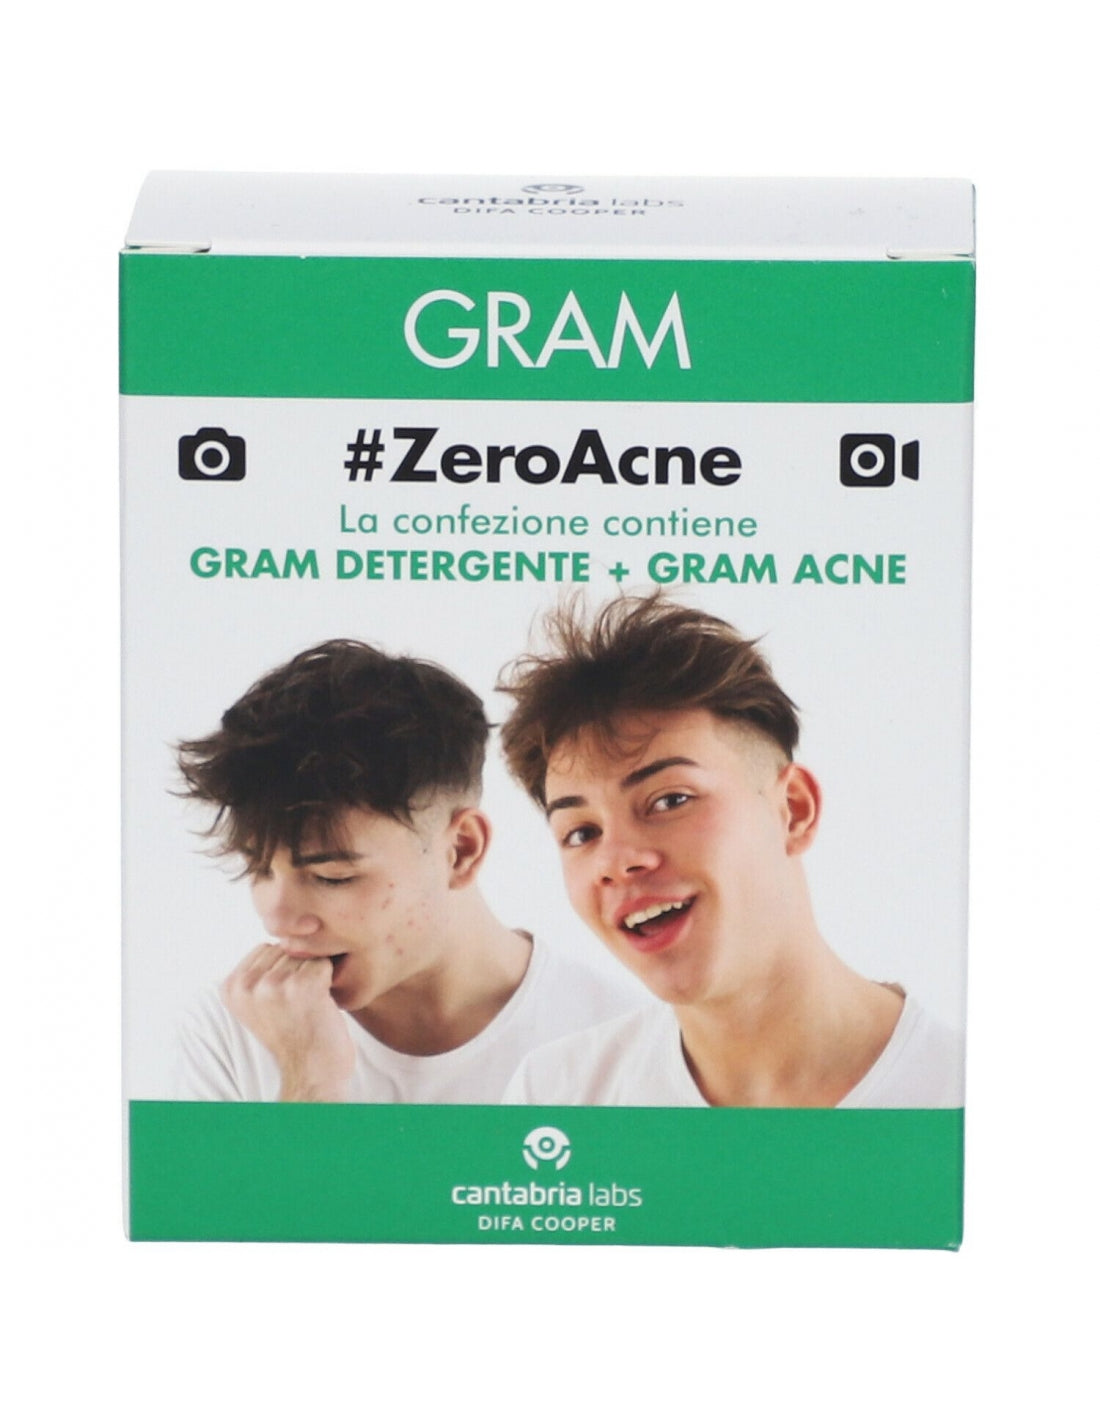 Gram Zero Acne gram detergente+gram acne